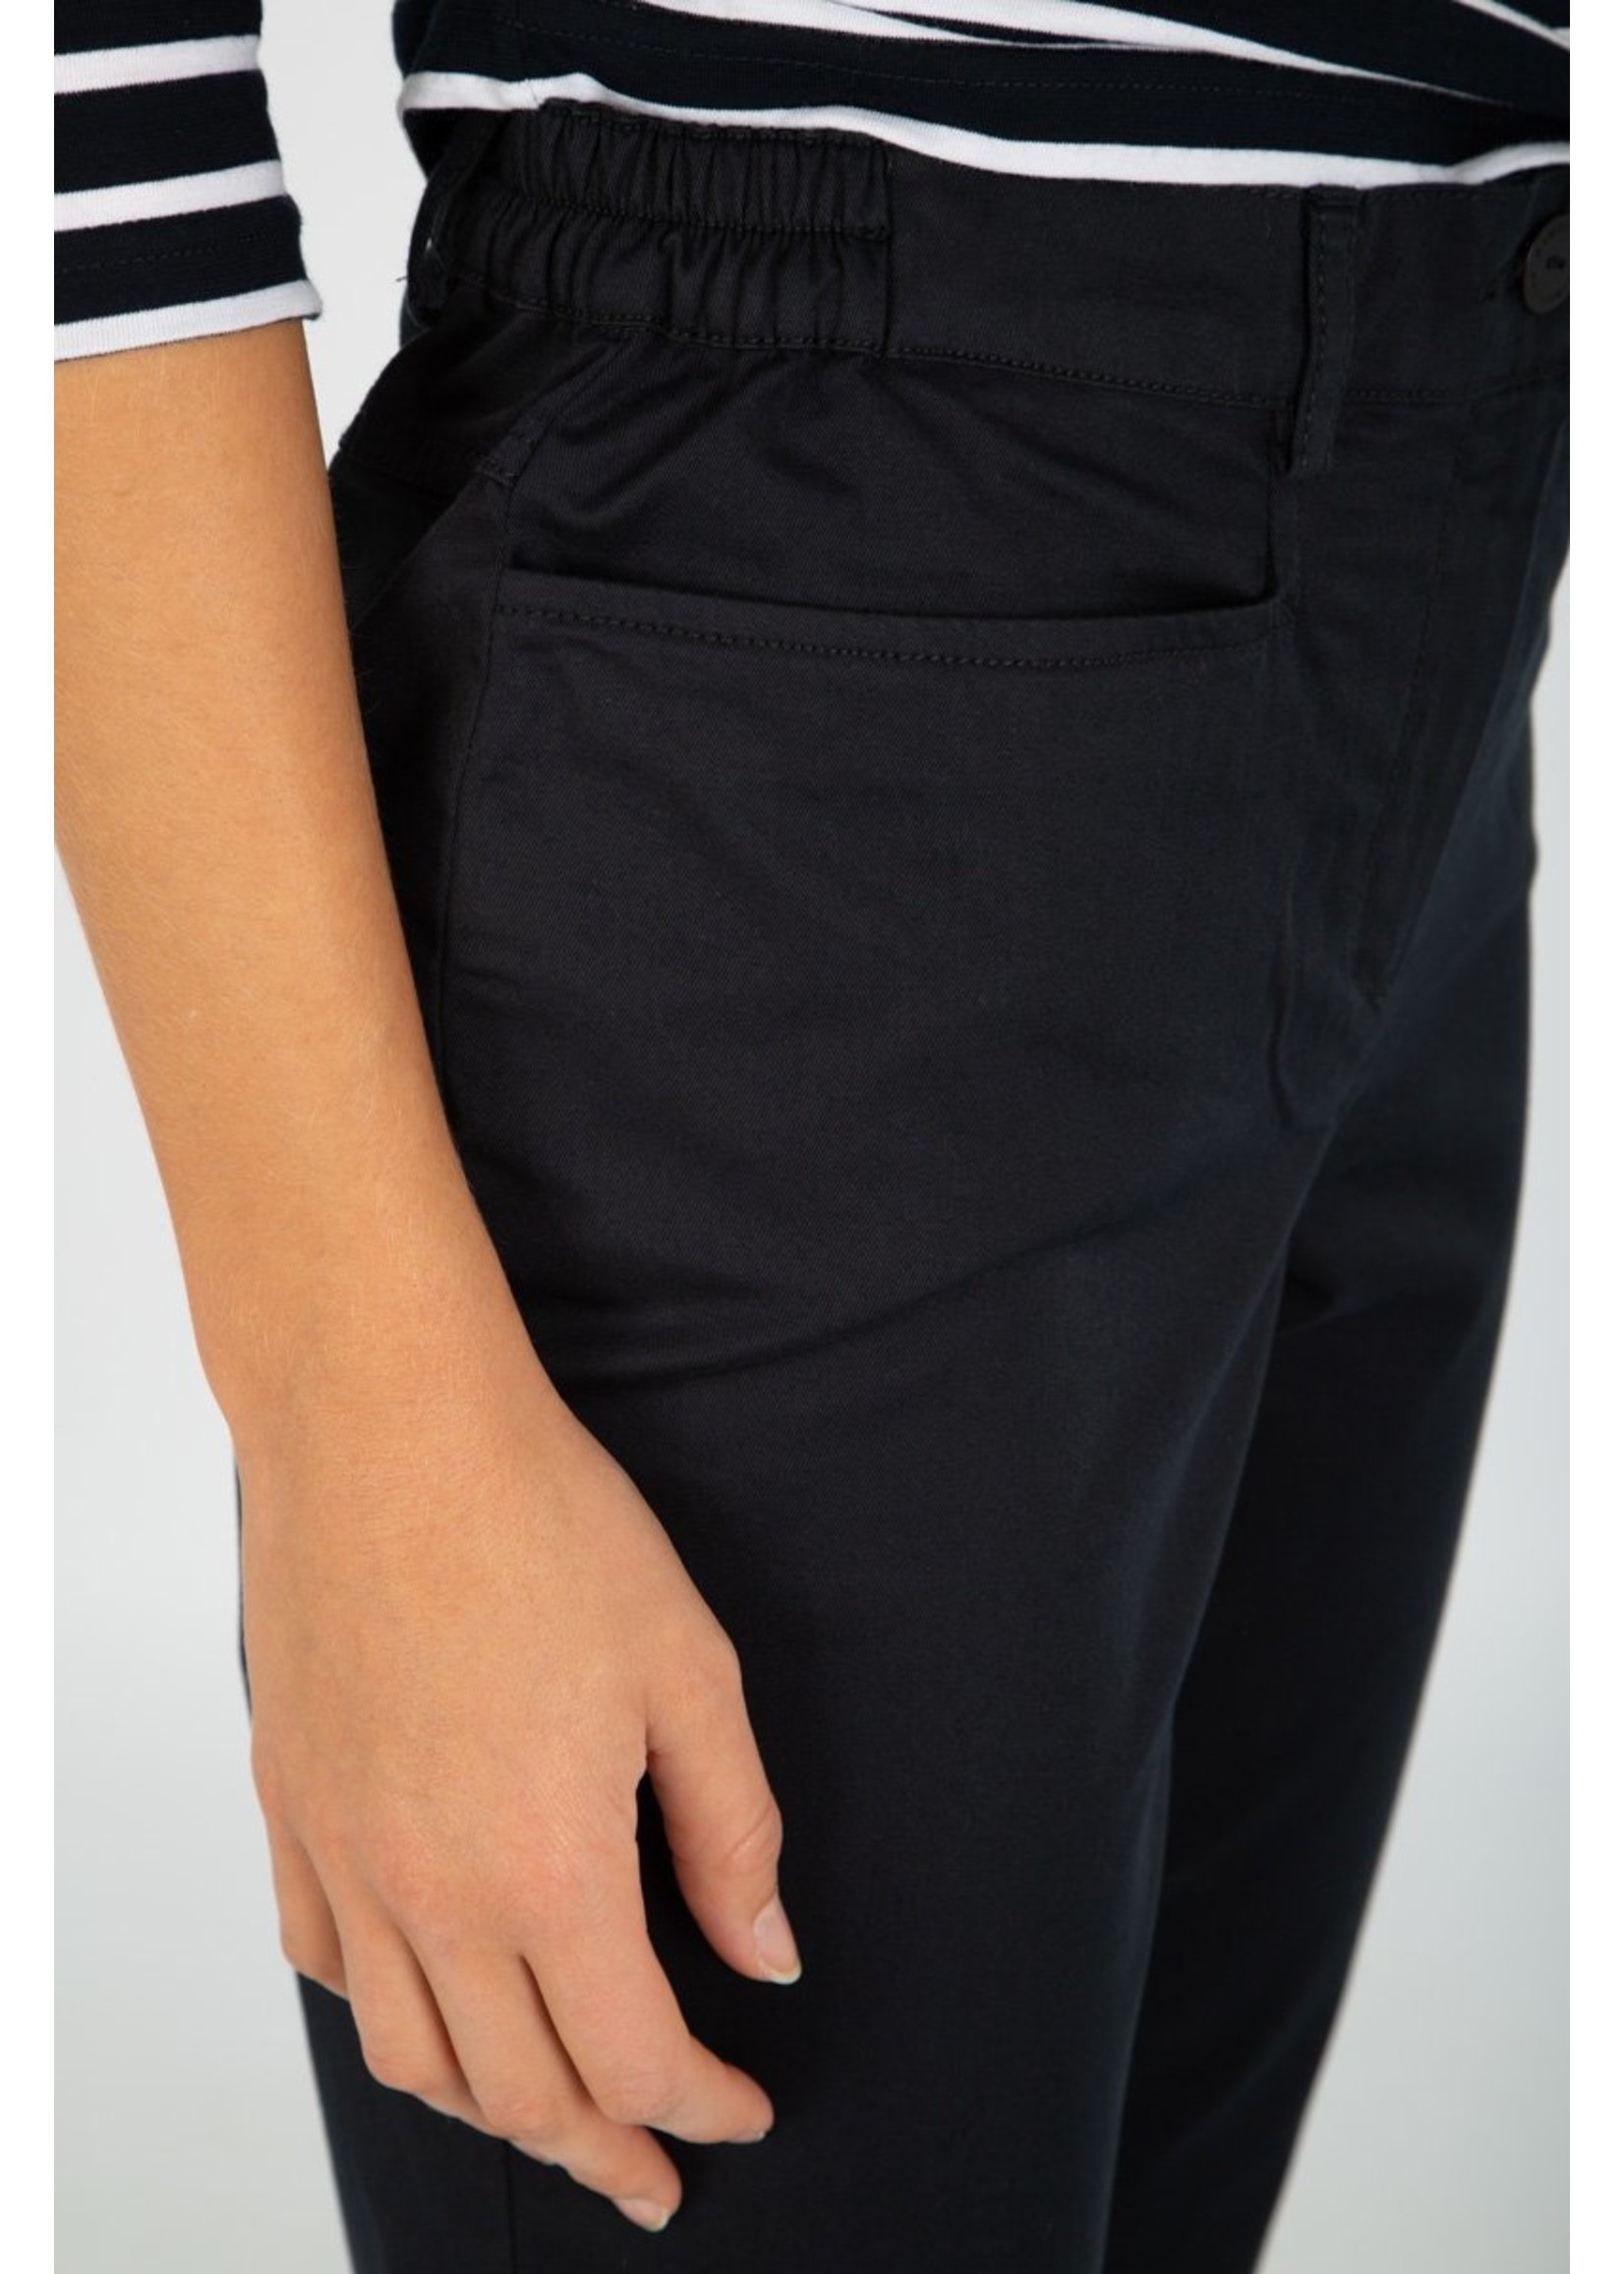 ARMOR-LUX Women's Trimaran trousers